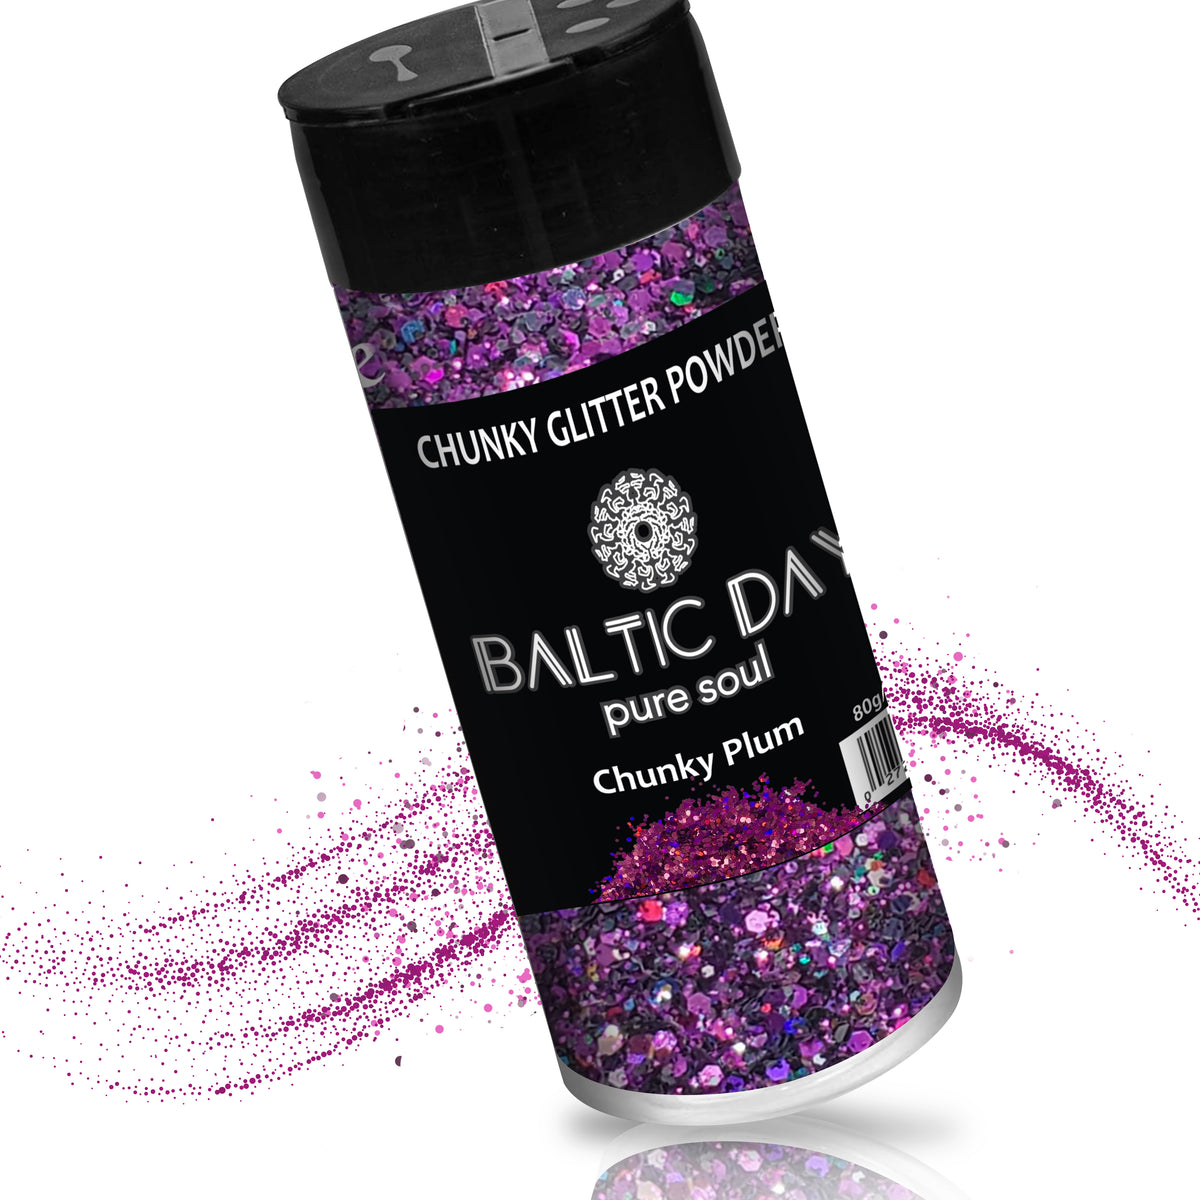 Chunky Glitter Powder - CHUNKY PLUM - 80g — BALTIC DAY